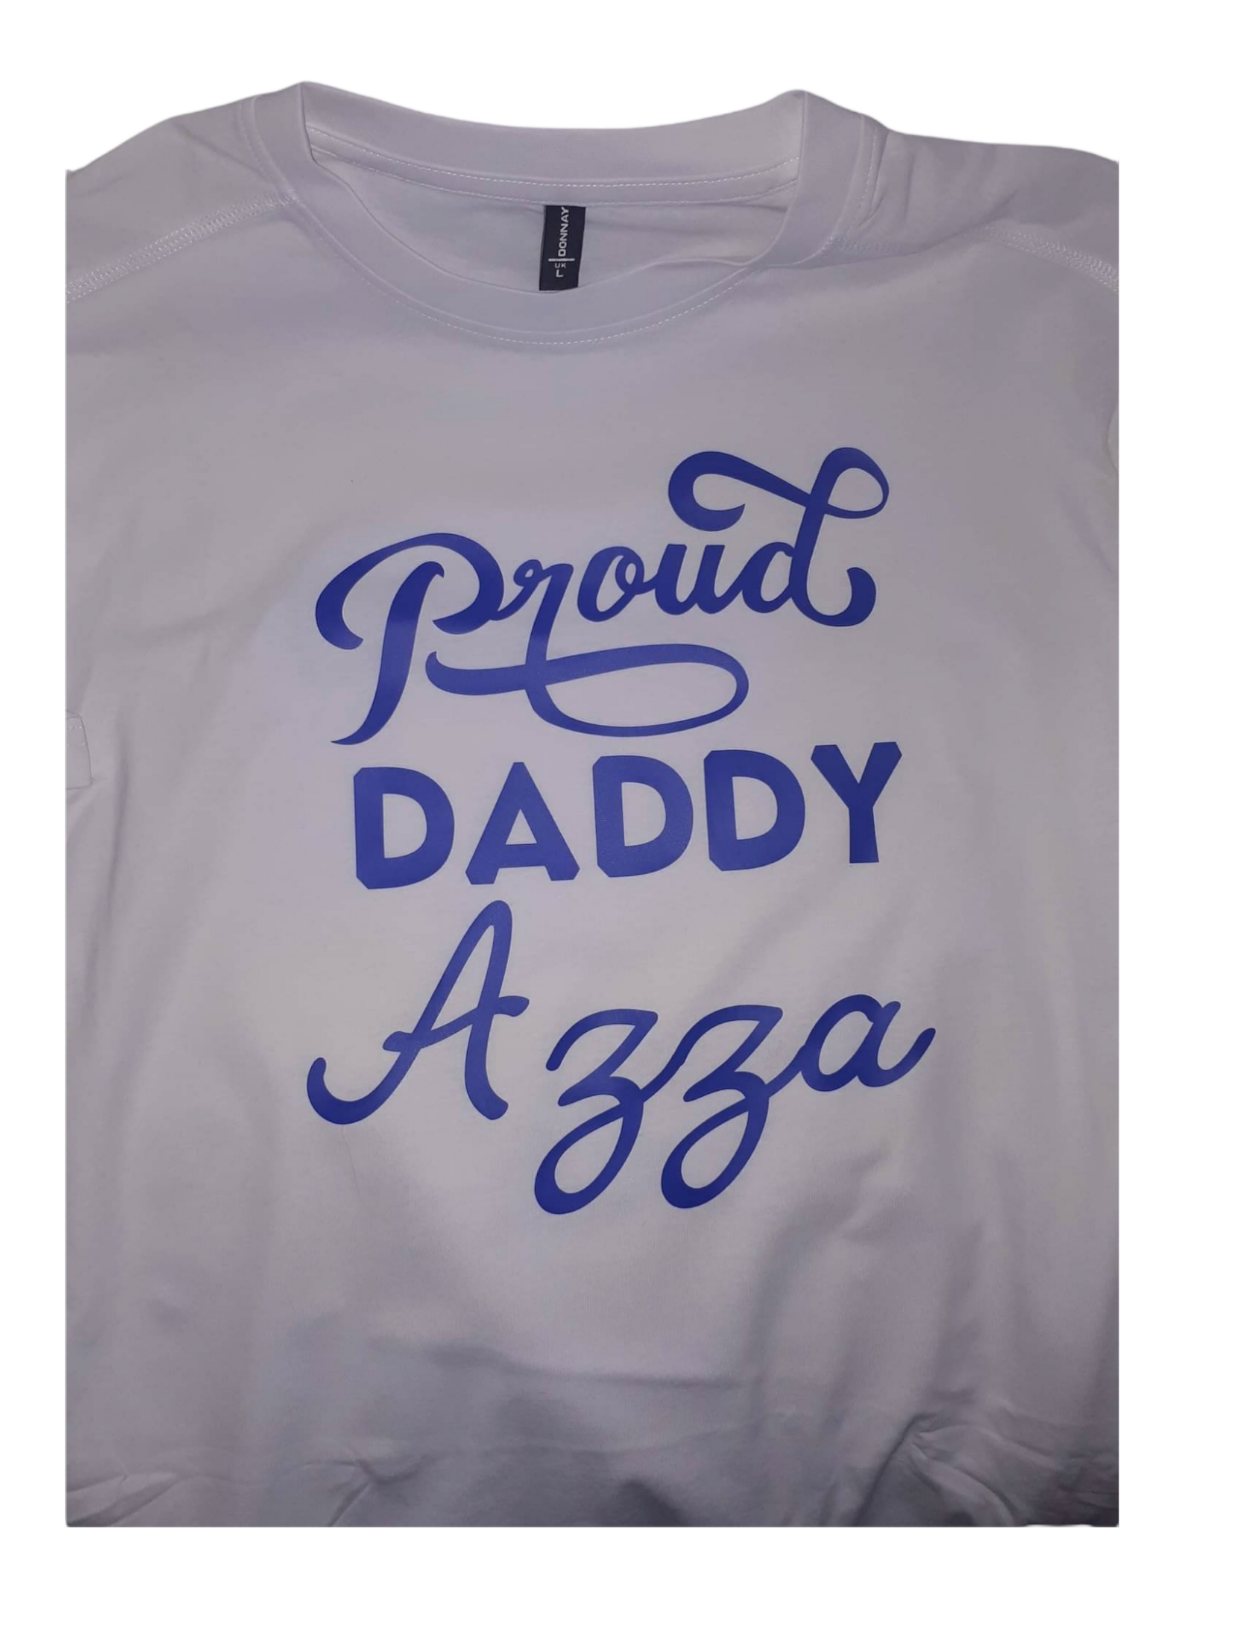 Daddy t shirt